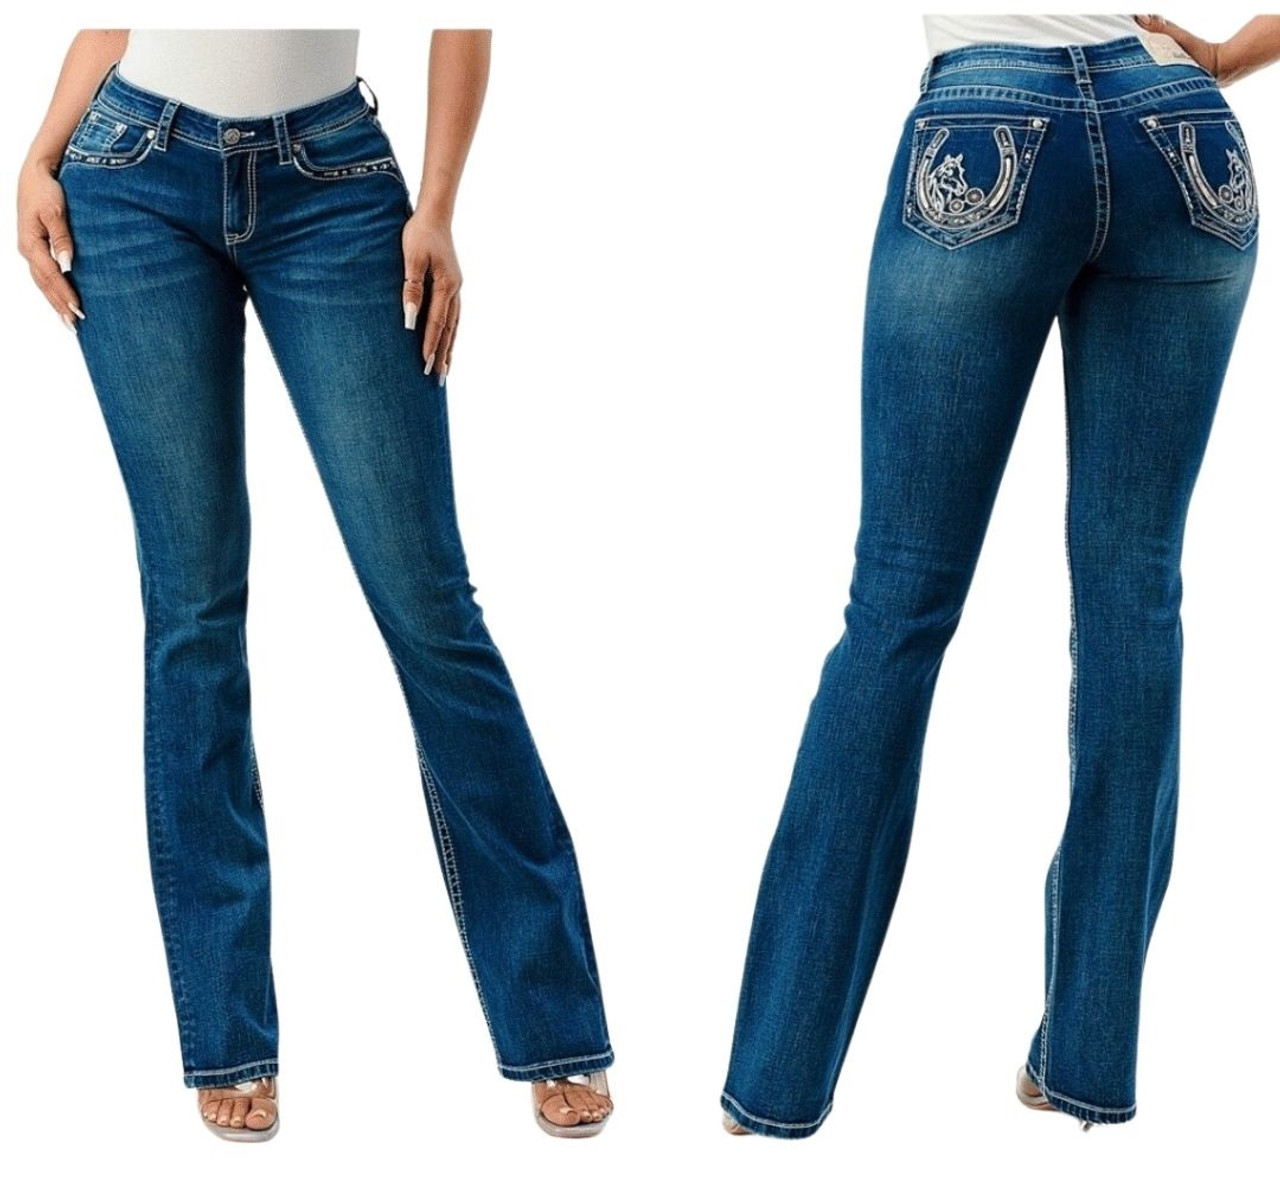 Grace in LA Jeans - Women's Embellished & Embroidered Vintage Jeans